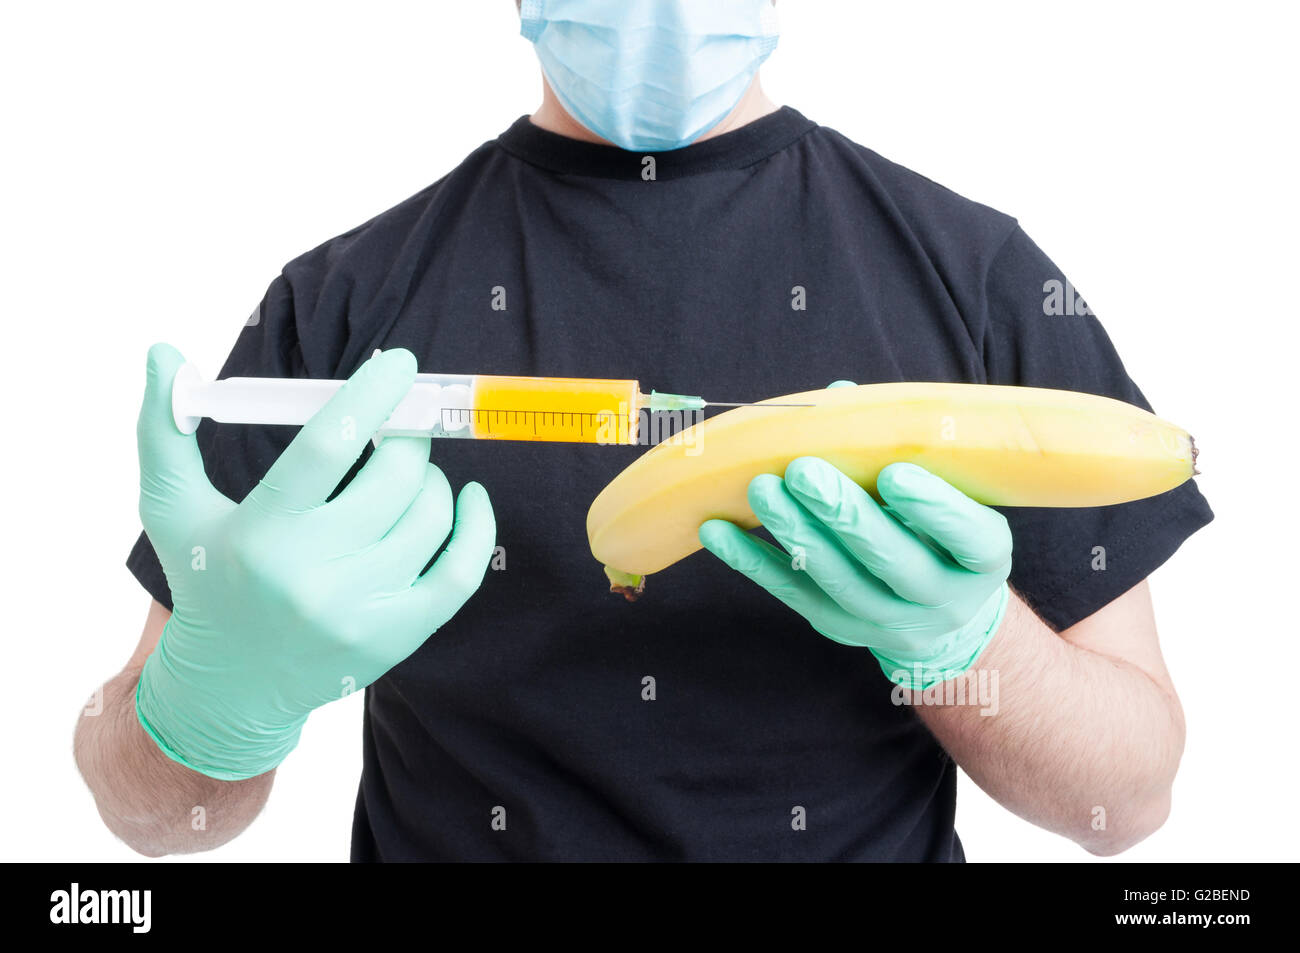 Banana genéticamente modificados o fruta y jeringa en manos varón vestido de azul guantes como alimento artificial concepto aislado en blanco Foto de stock